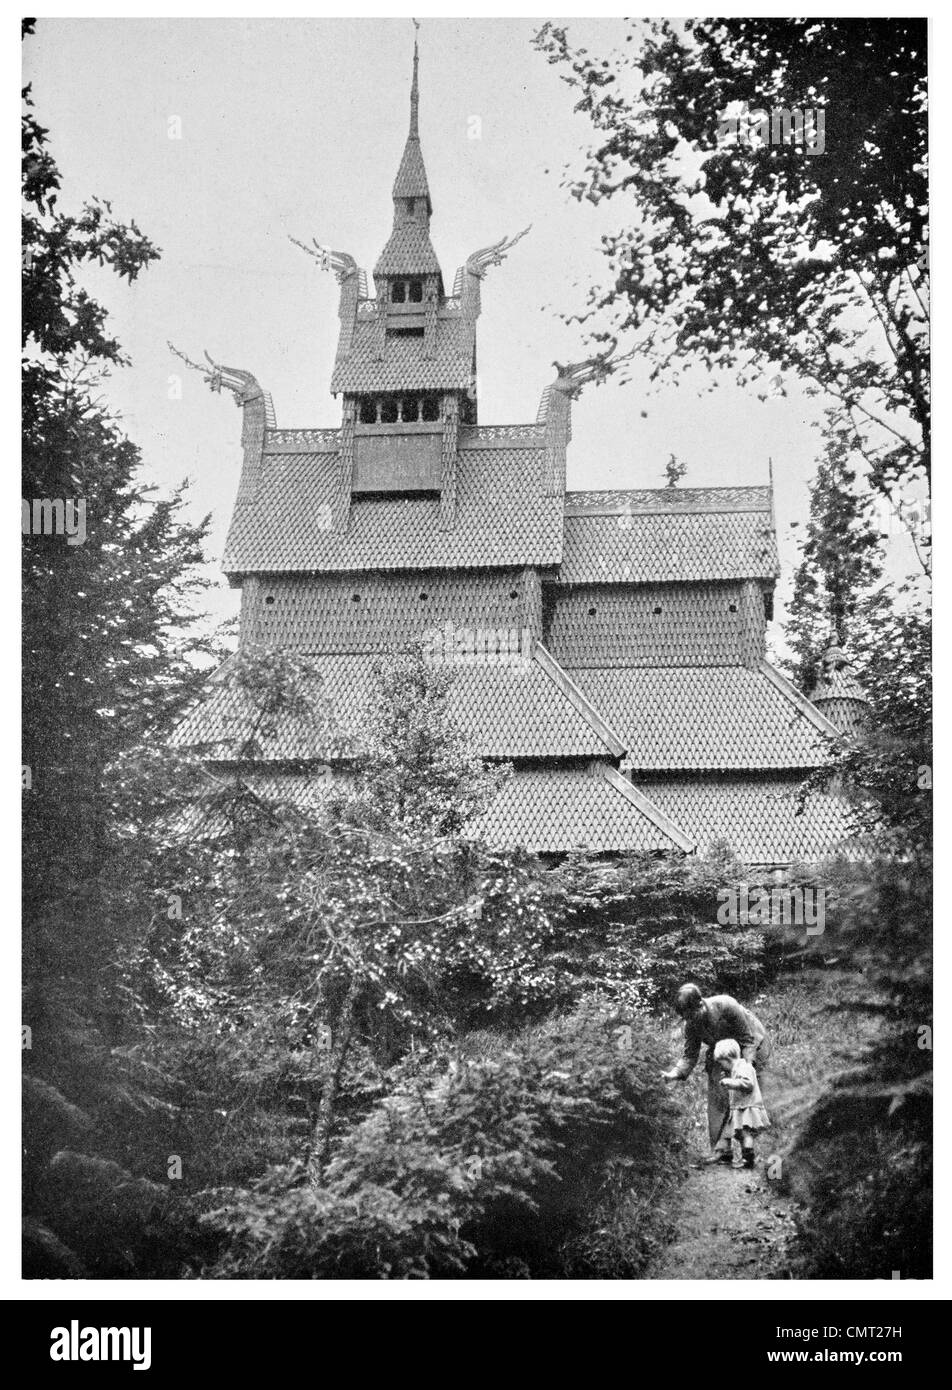 1924 Stavekirker Borgund stavkirke Sogn Norvège l'Église du xiie siècle Banque D'Images